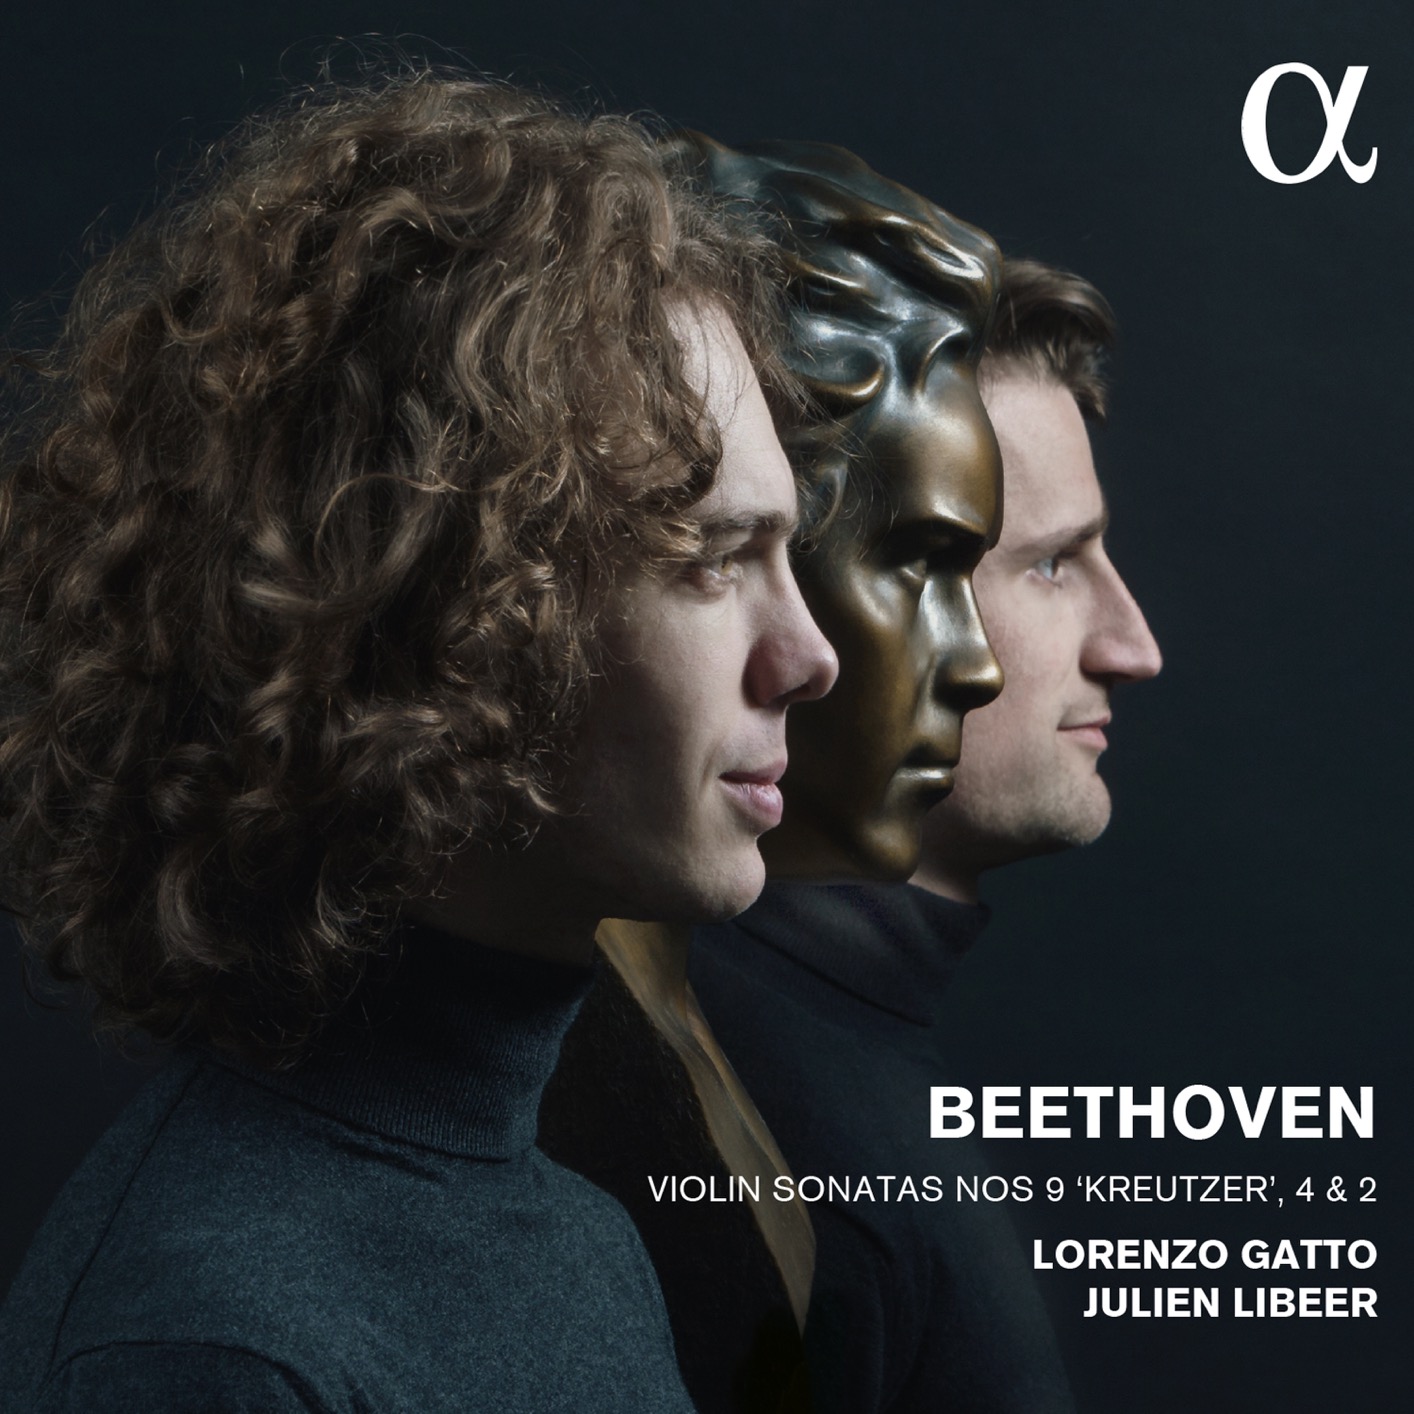 Lorenzo Gatto & Julien Libeer – Beethoven: Violin Sonatas Nos 9 “Kreutzer”, 4 & 2 (2016) [Qobuz FLAC 24bit/96kHz]